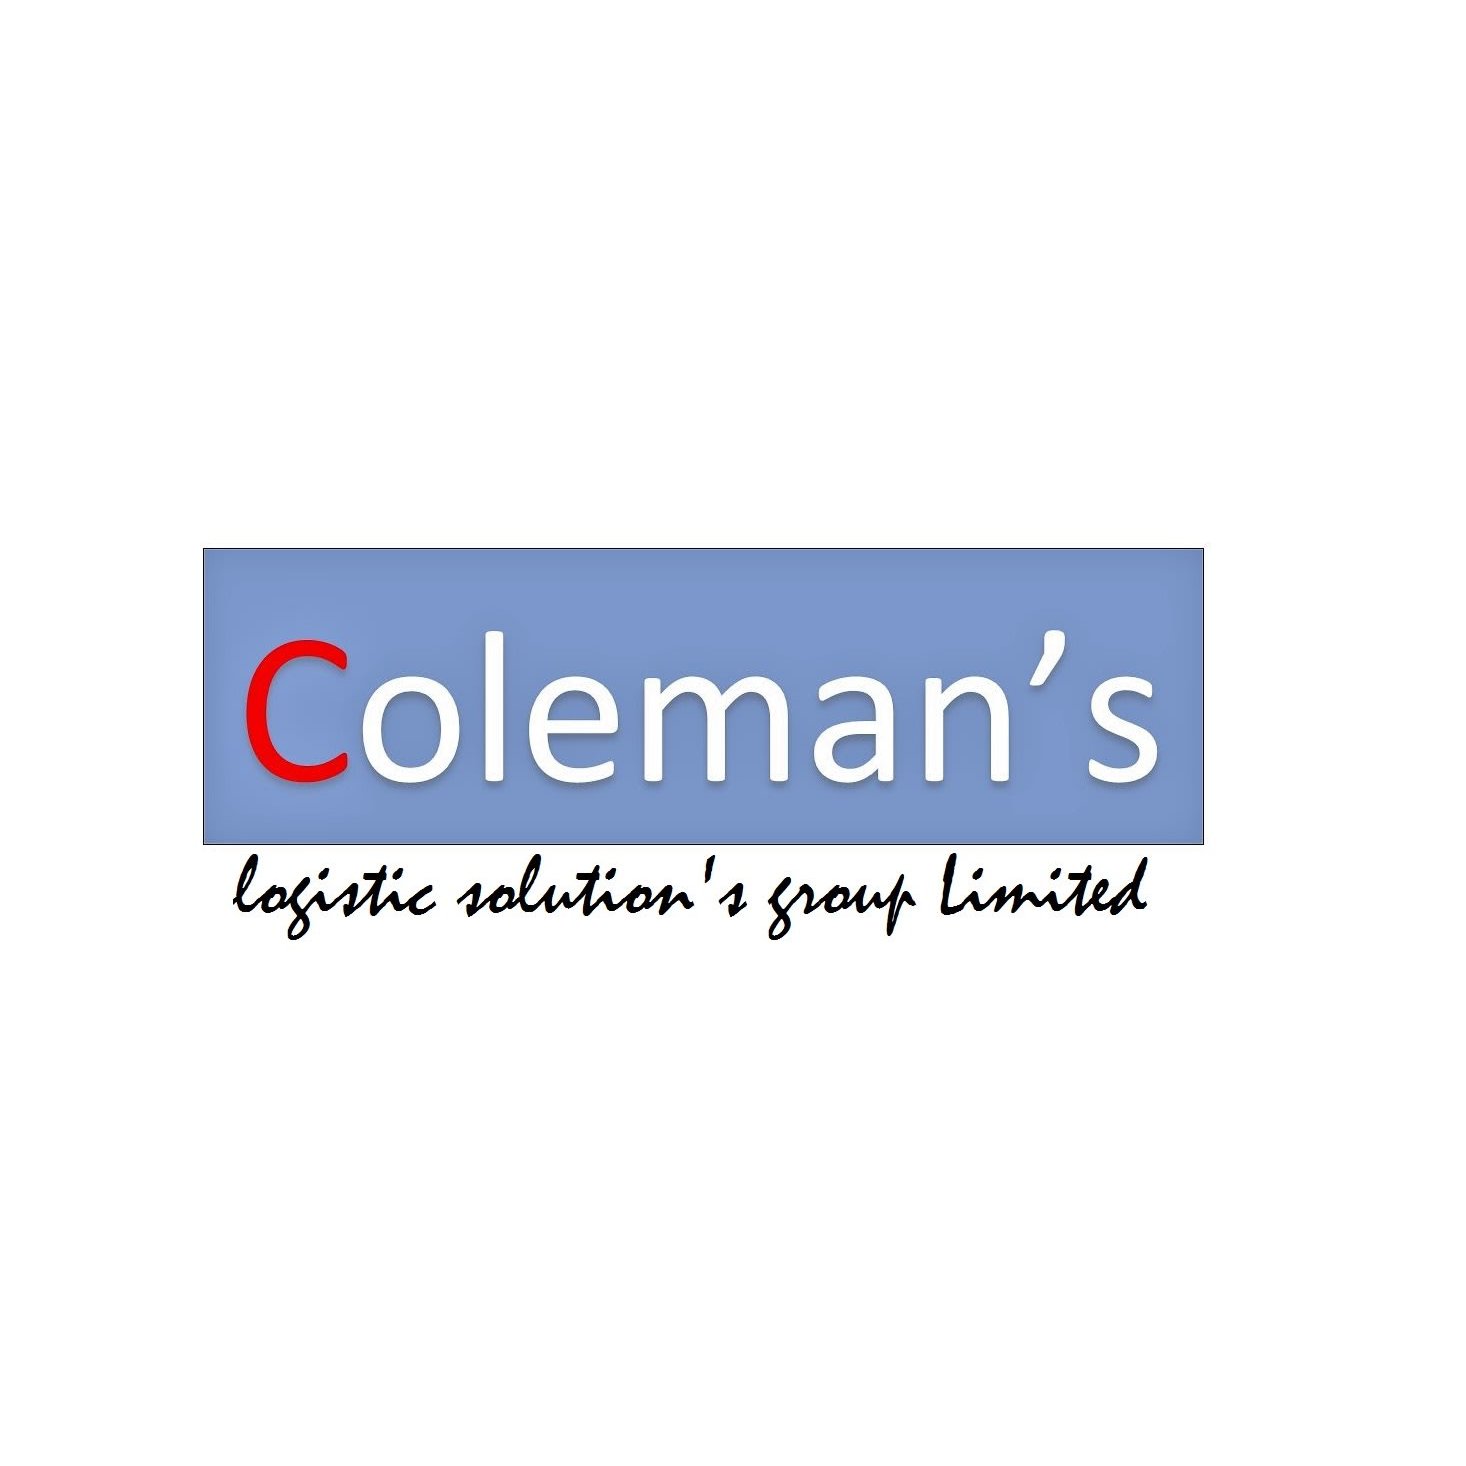 Coleman's logistic solutions group Ltd Logo